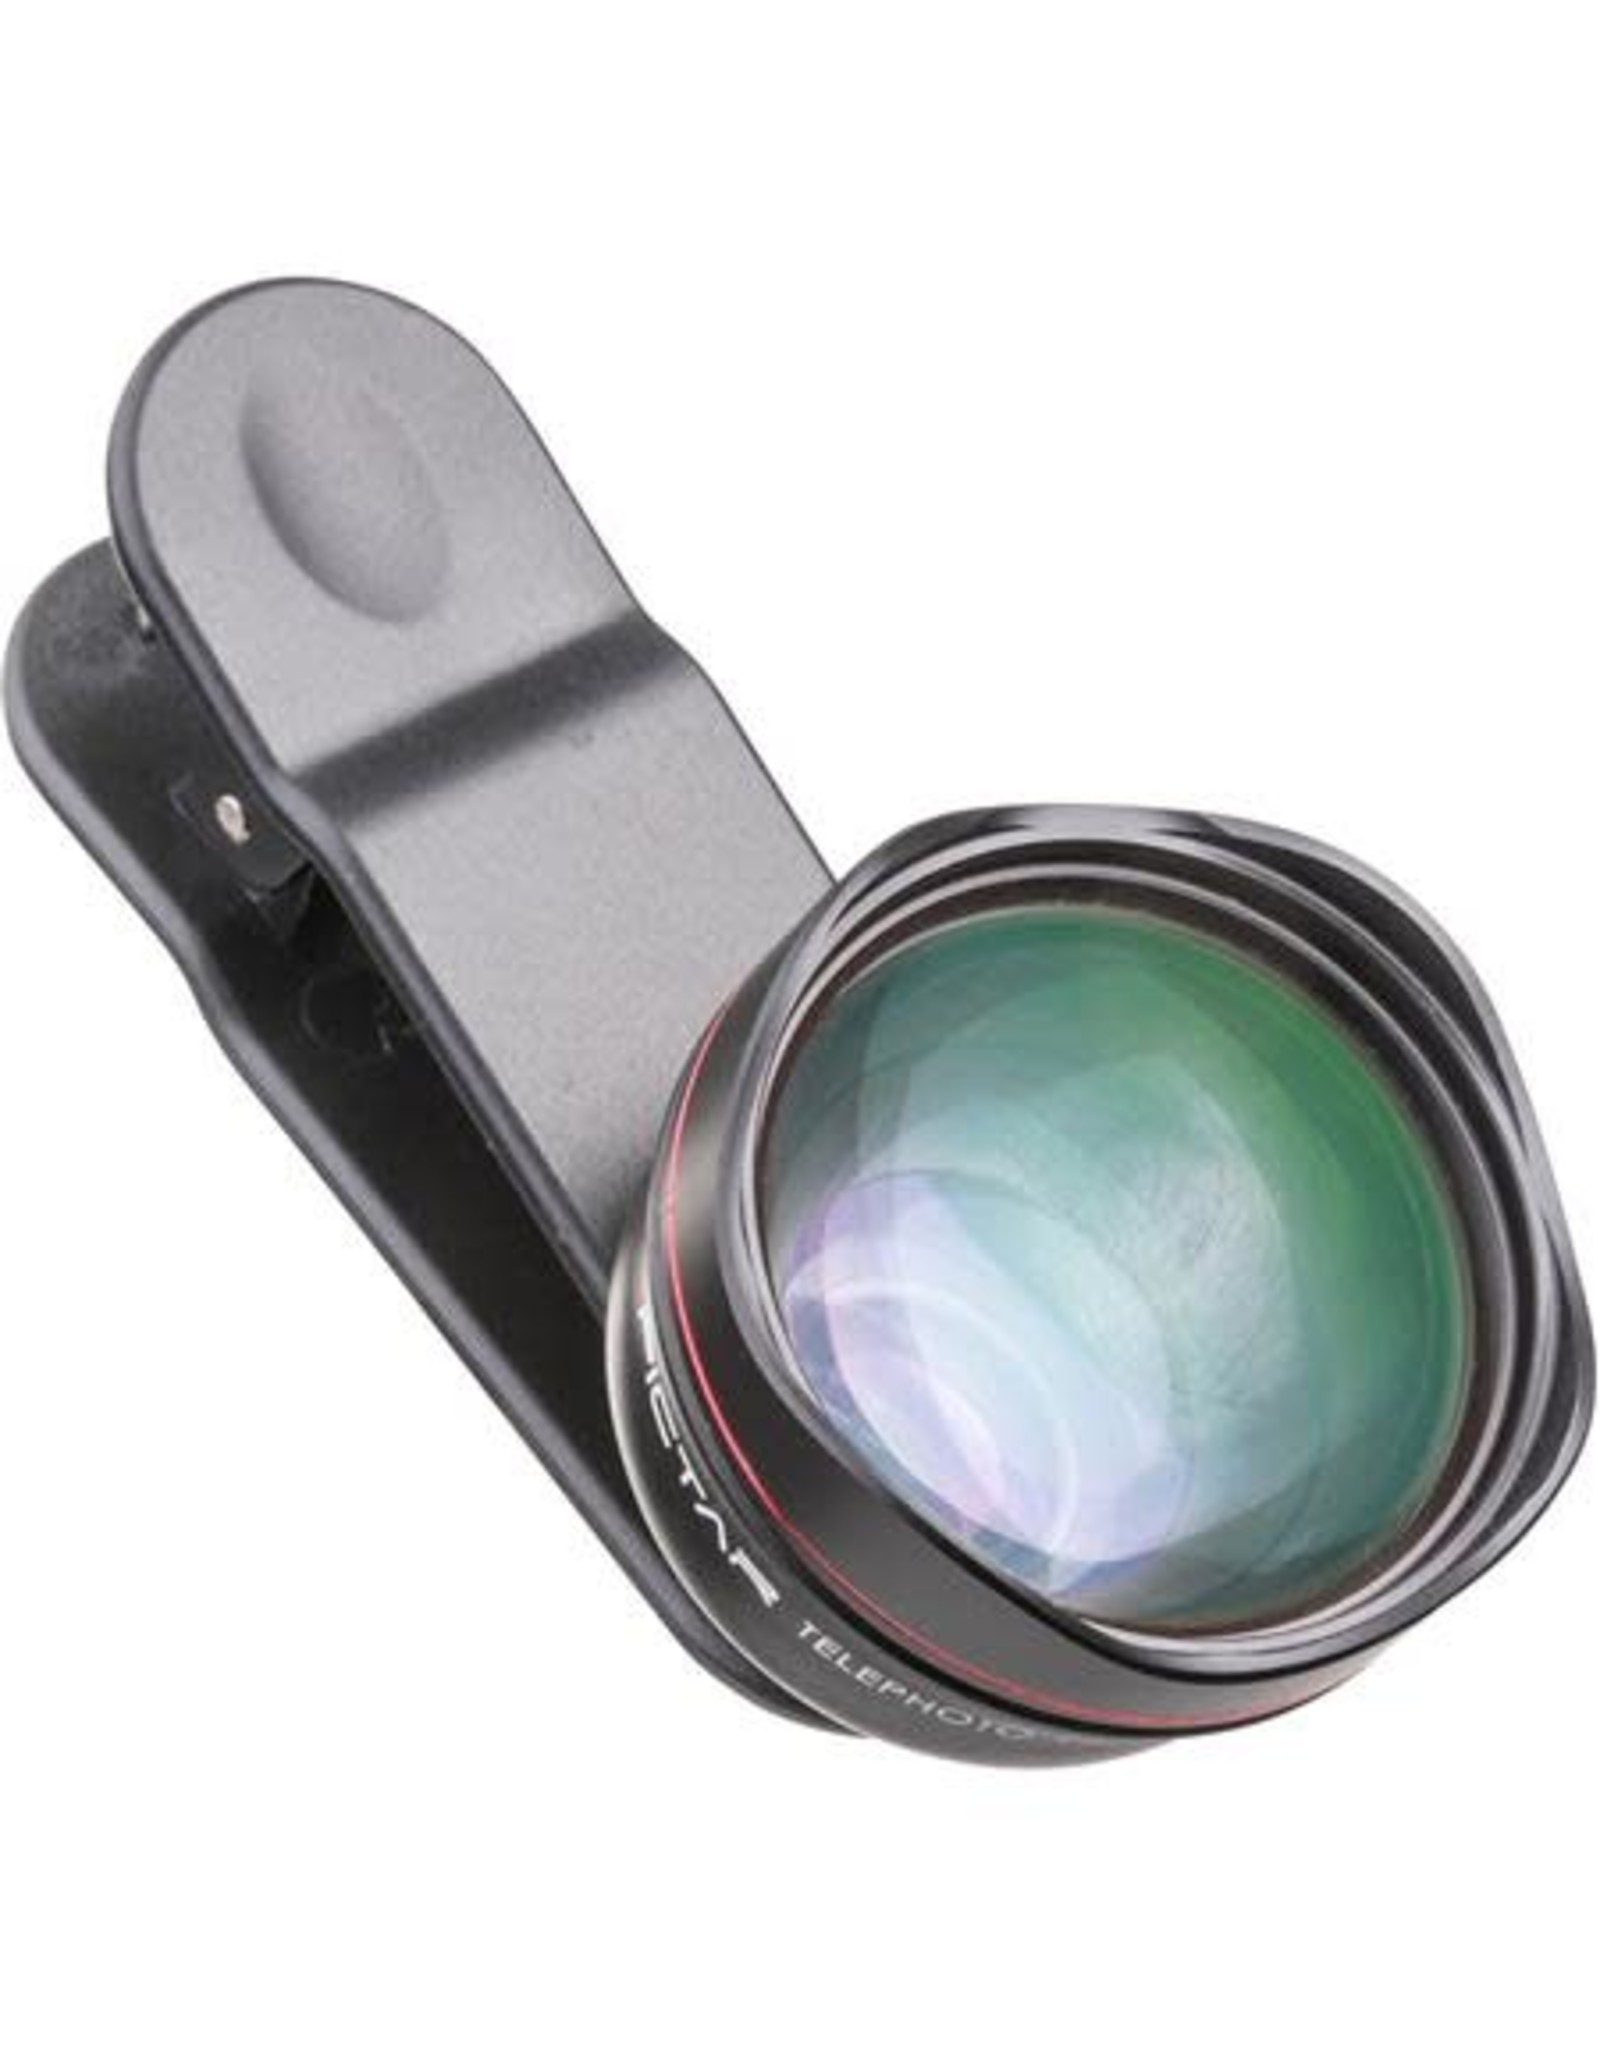 Pictar Smart 60mm Telephoto Lens for Smartphones